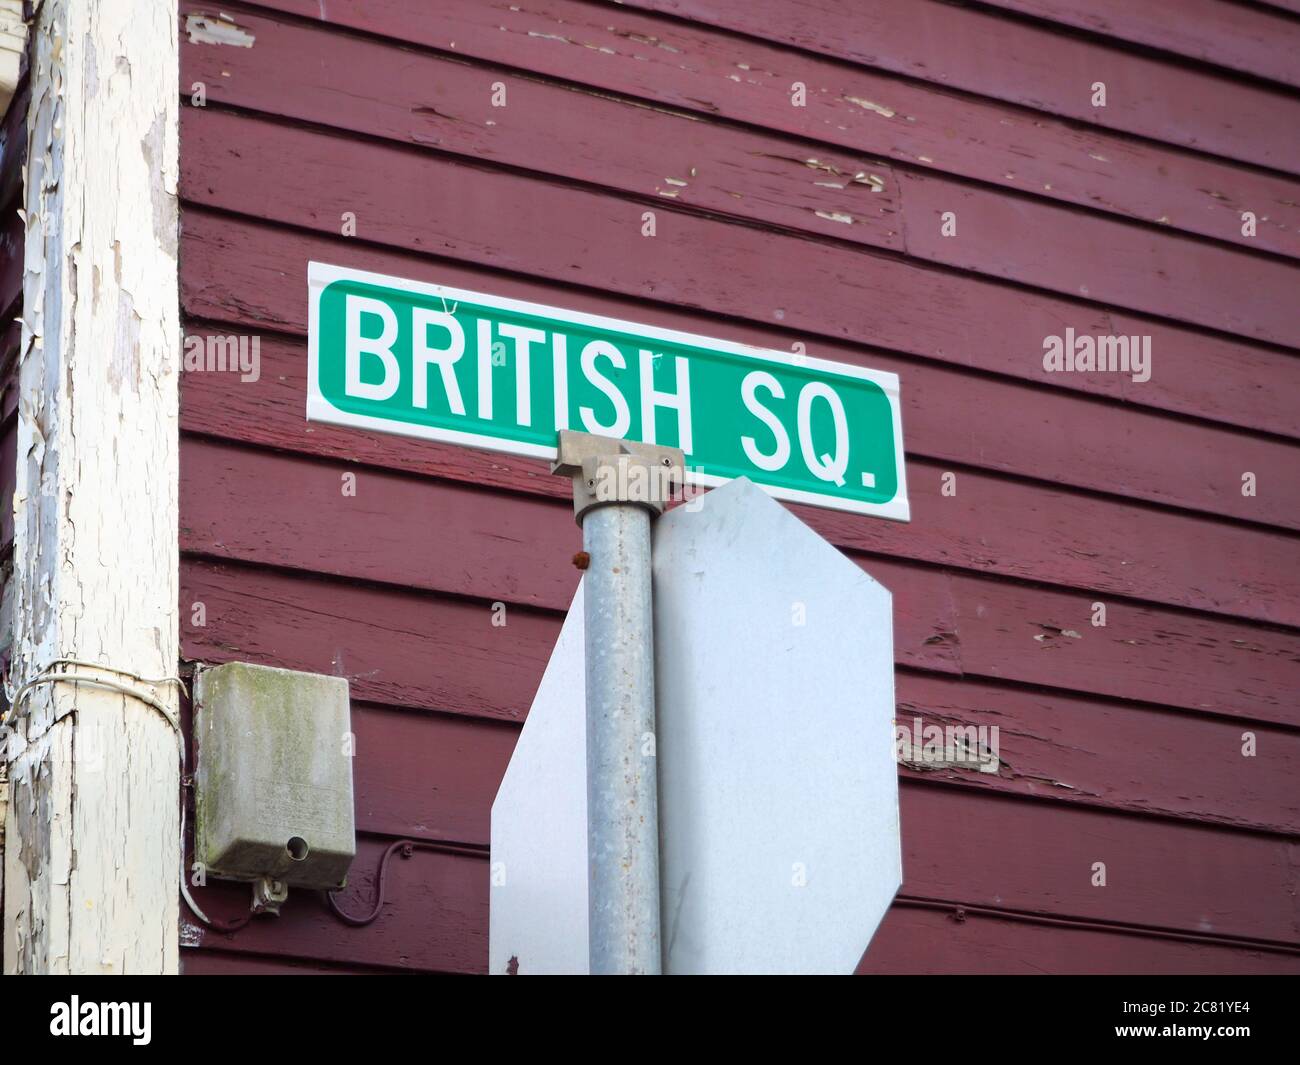 British Sq. St John’s, Newfoundland, Canada Stock Photo